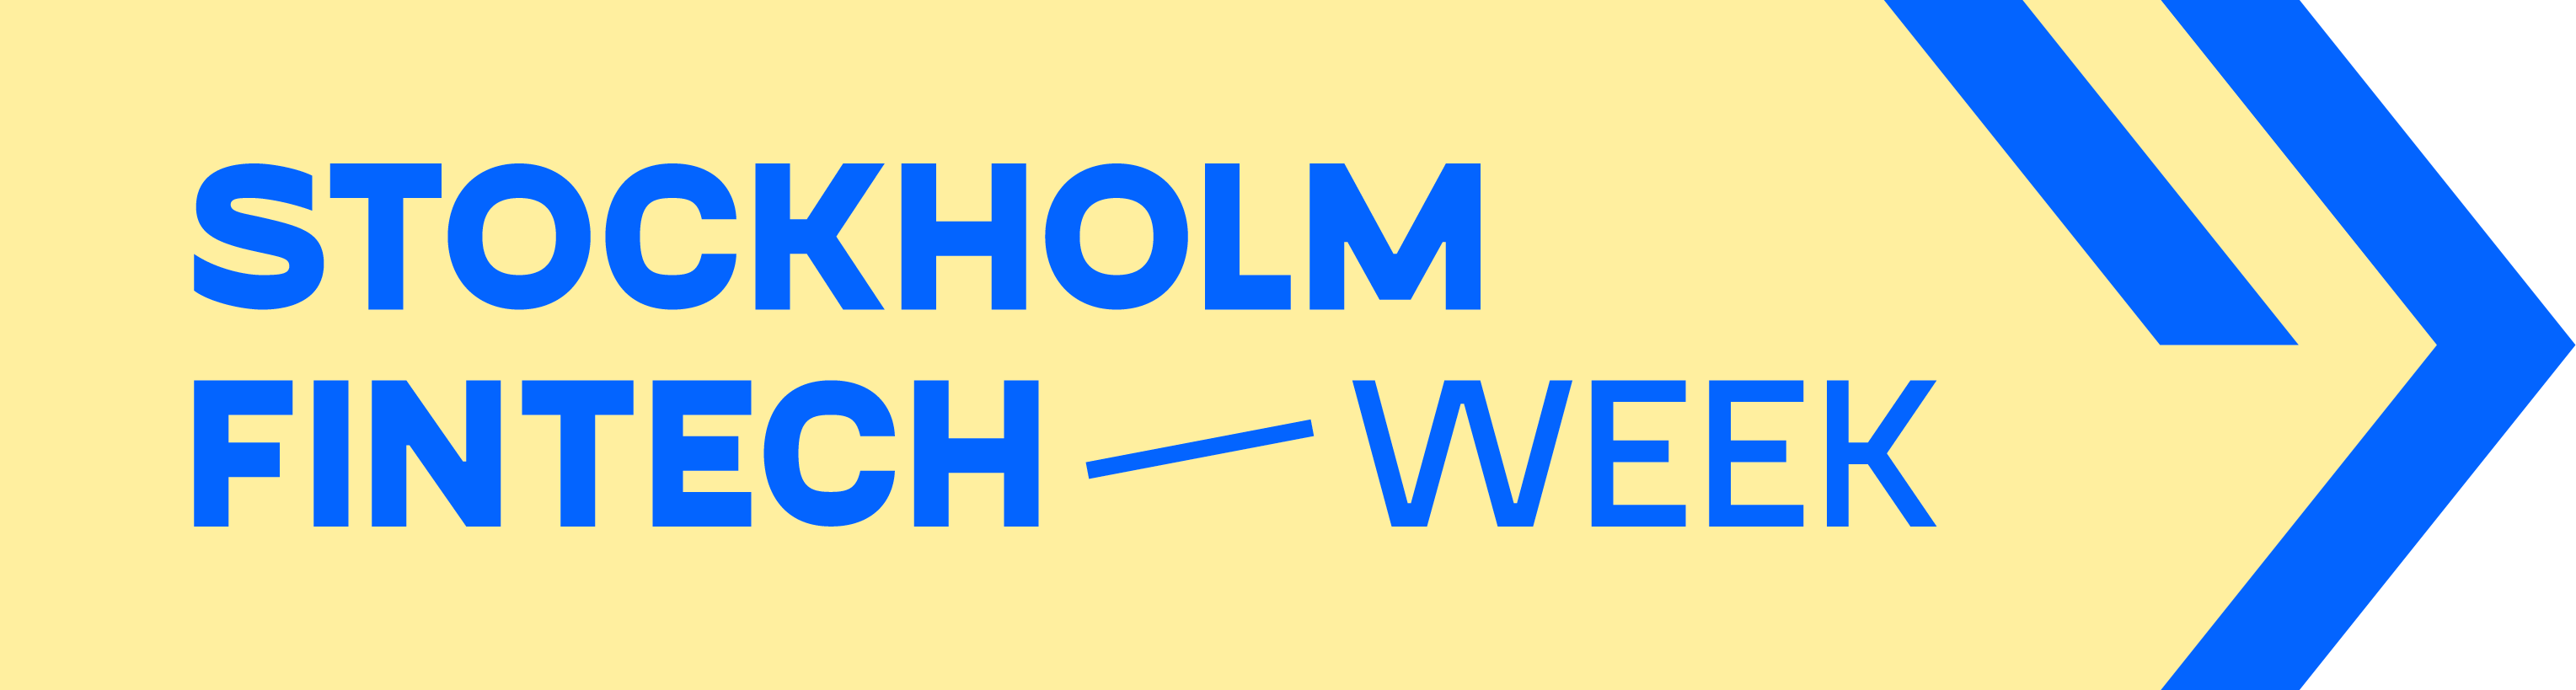 Stockholm Fintech Week Logo